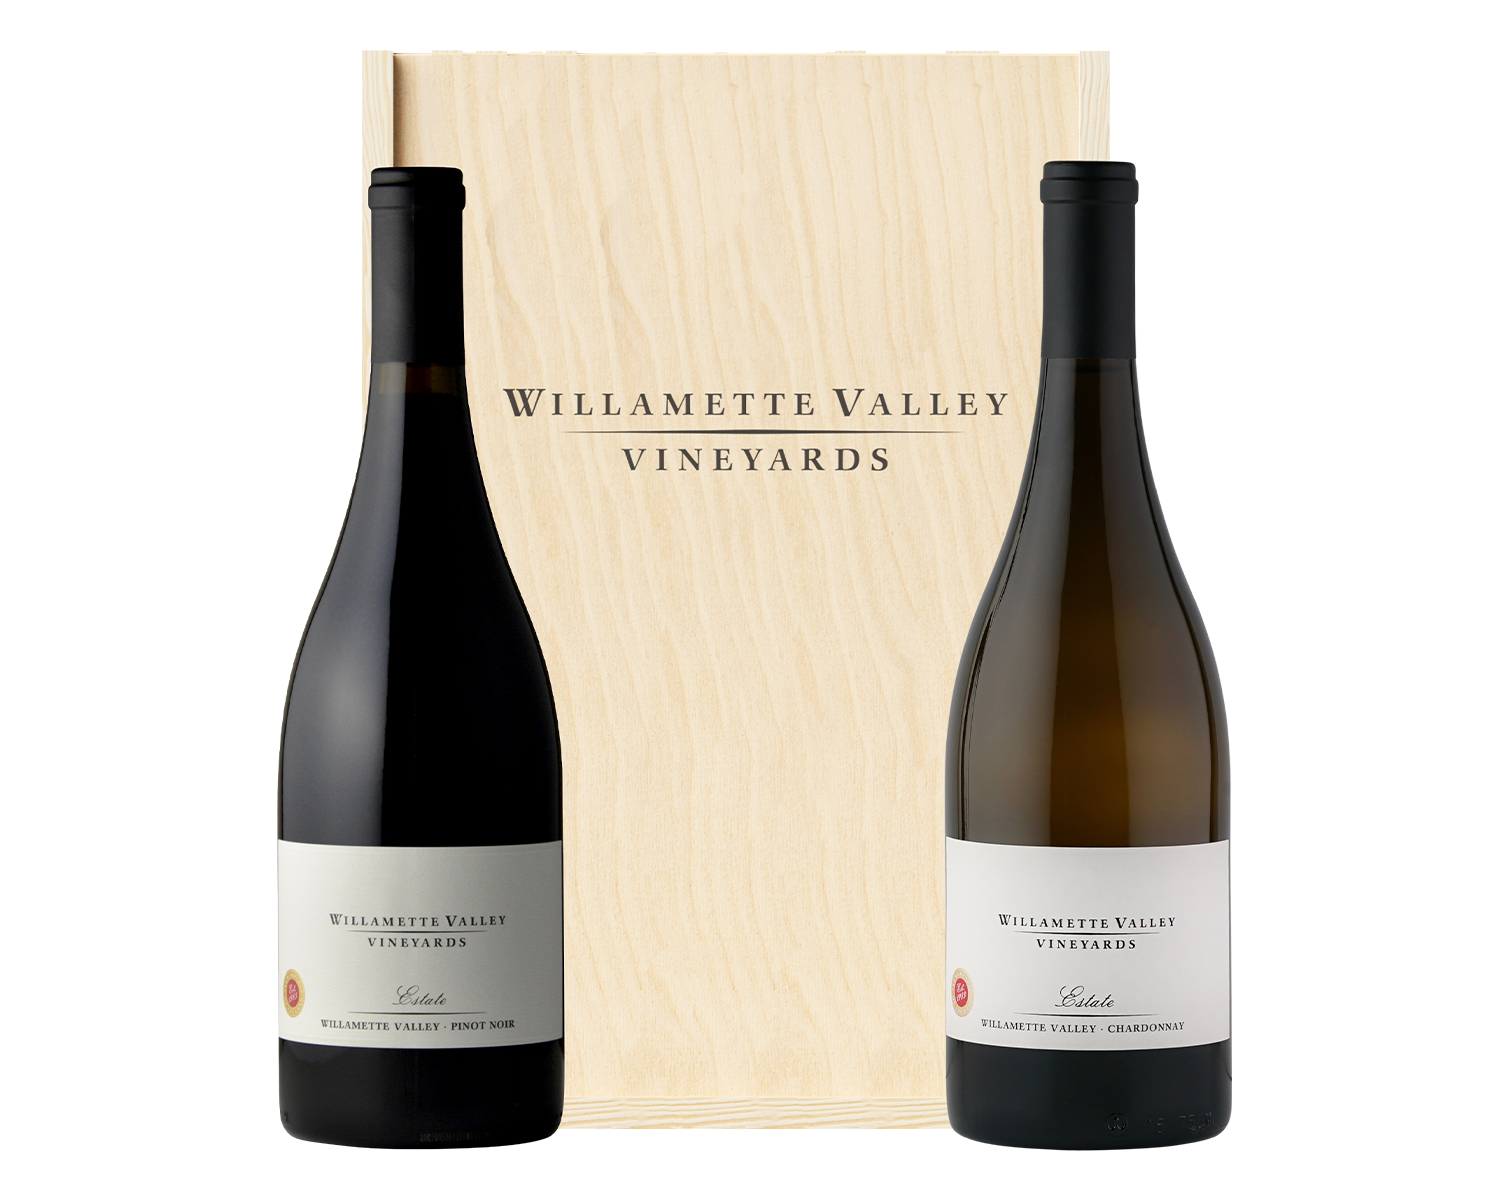 Two Willamette Valley Vineyards bottles in a wood box